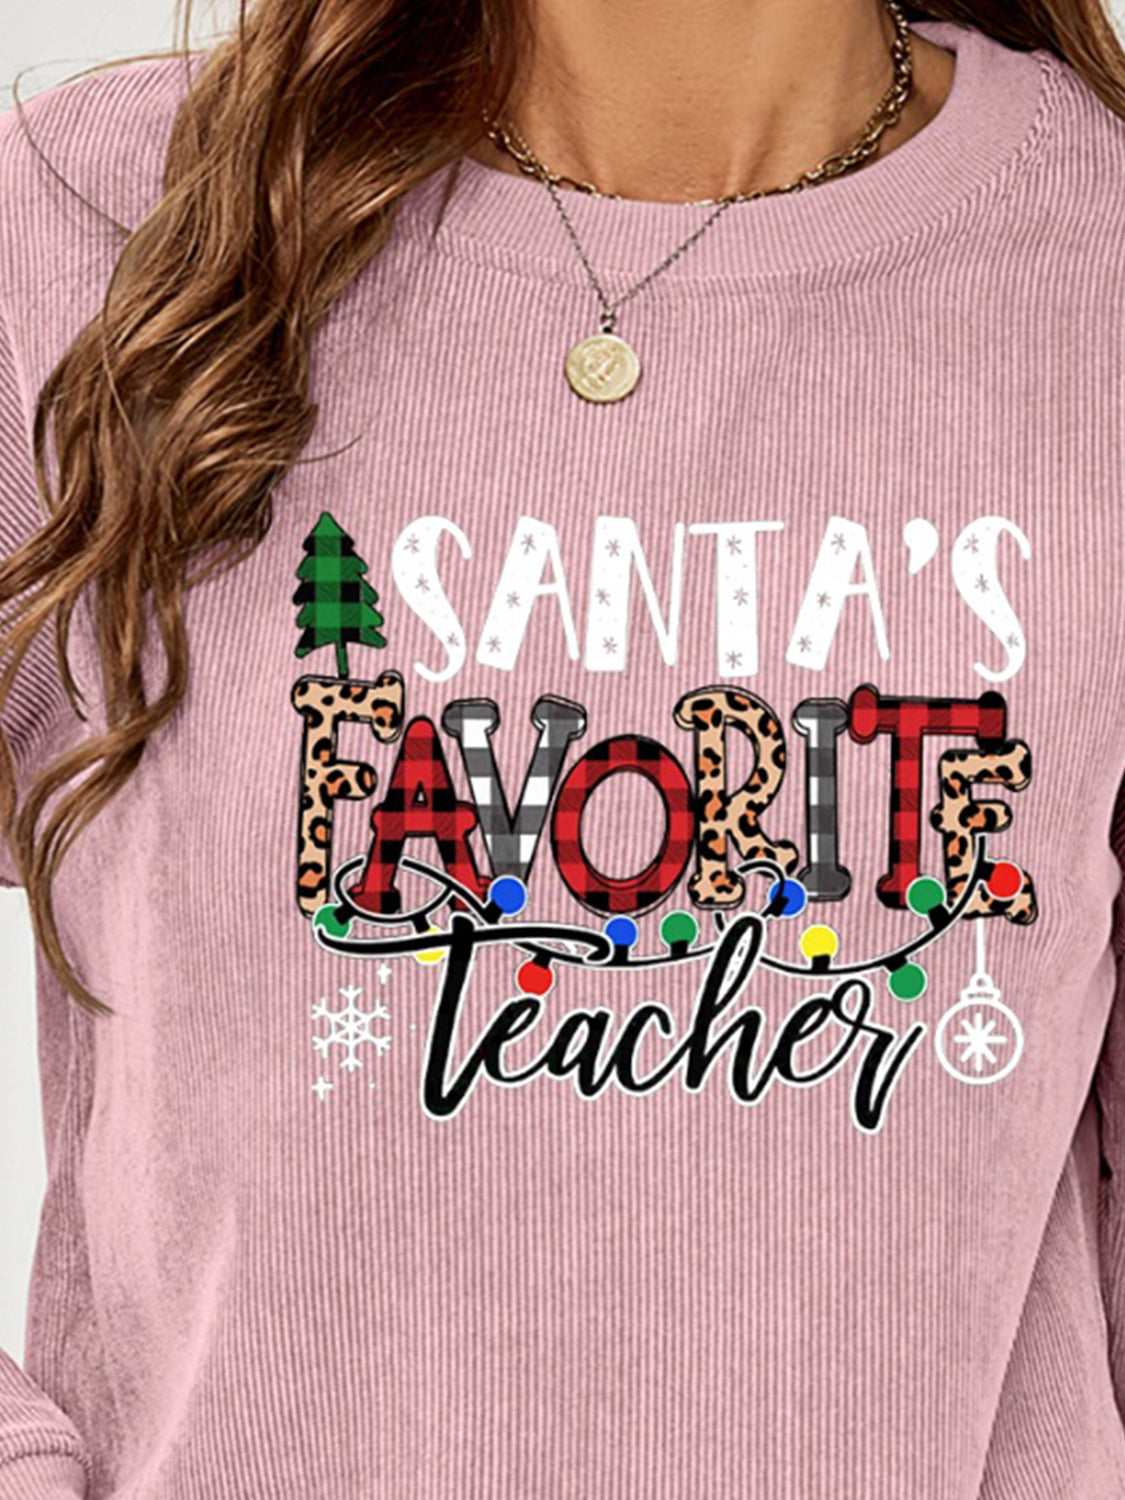 SANTA'S FAVORITE TEACHER Graphic Sweatshirt BLUE ZONE PLANET